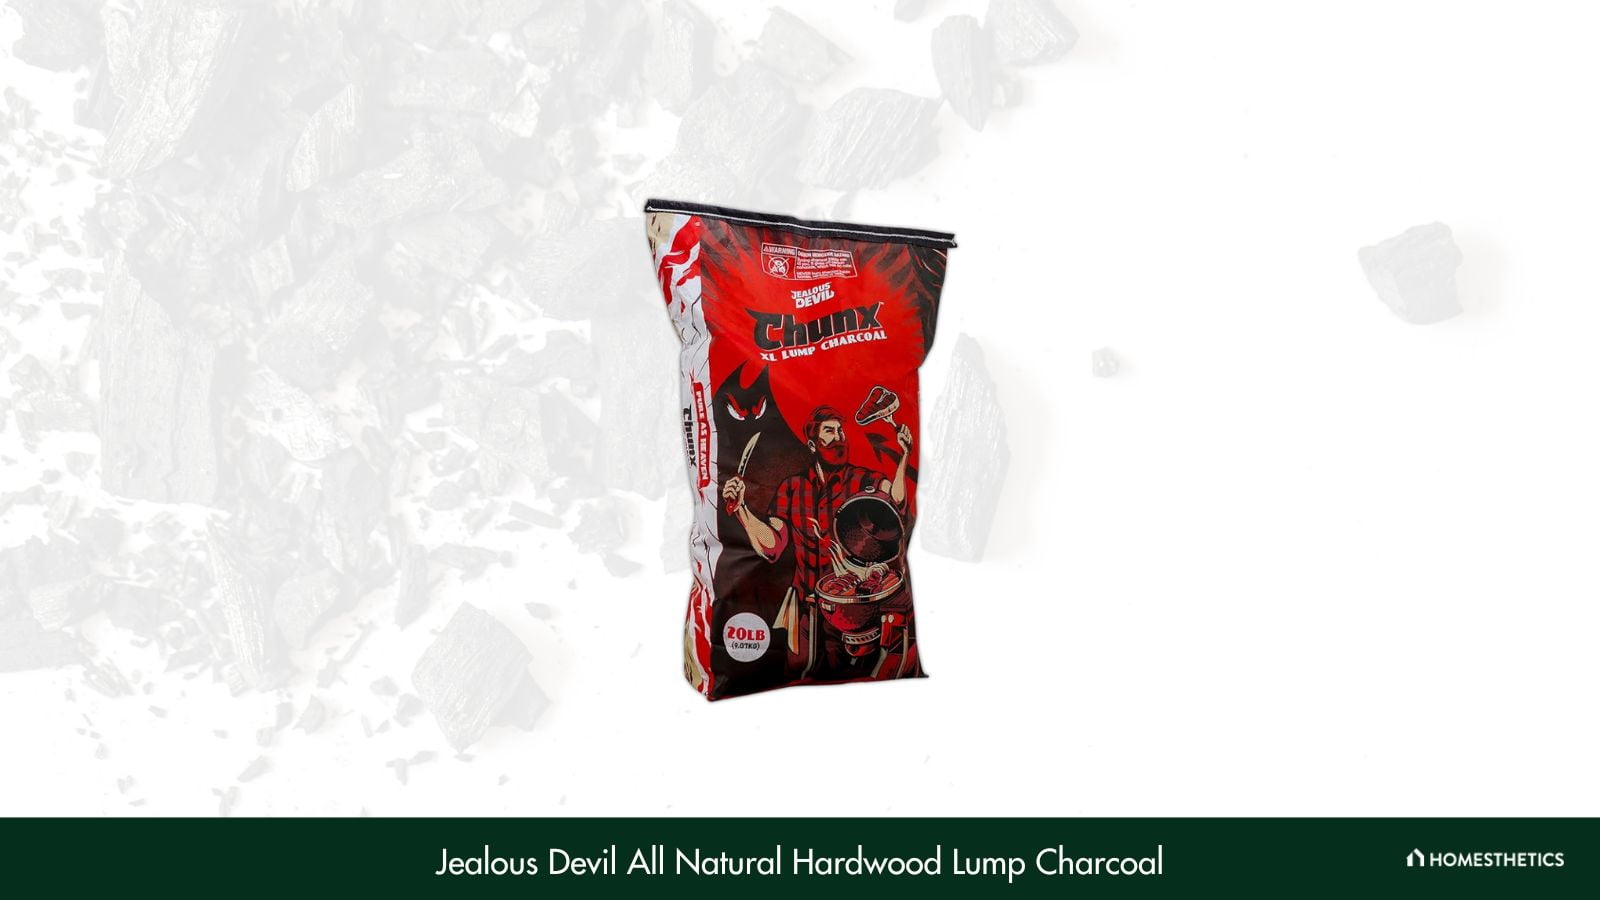 Jealous Devil All Natural Hardwood Lump Charcoal JD 20 LBS